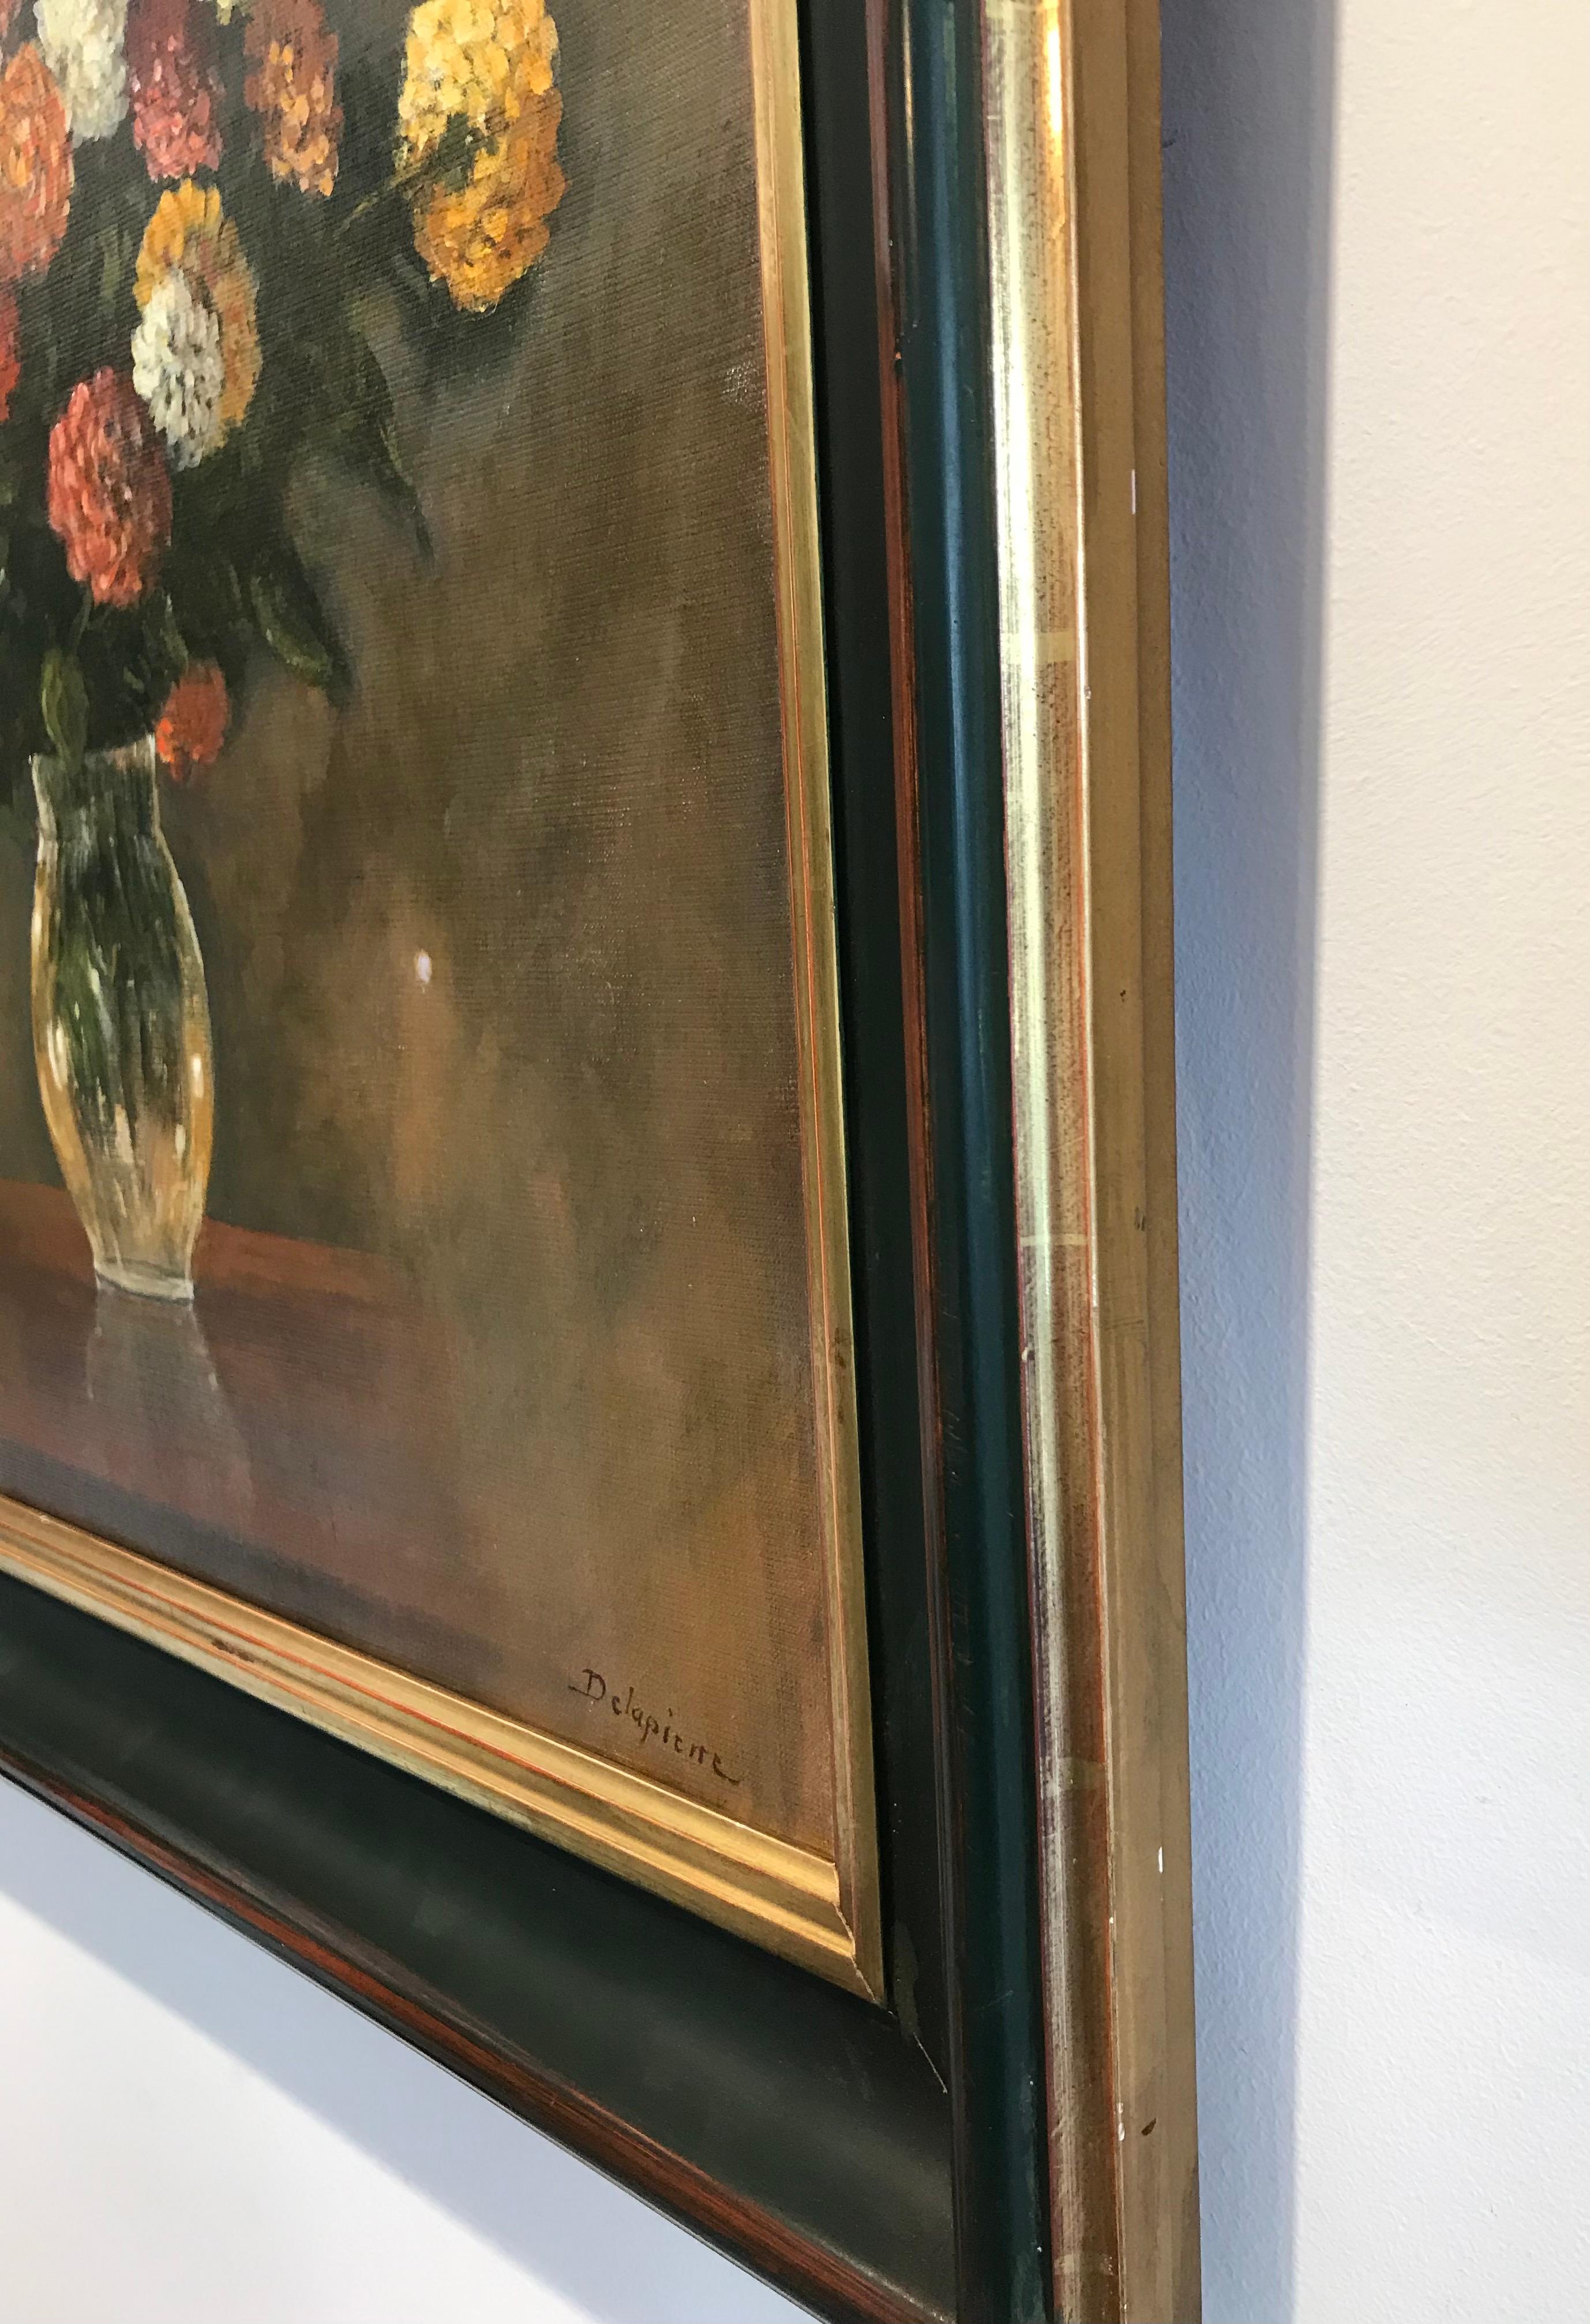 Dahlias by Roger Delapierre - Oil on canvas 46x55 cm For Sale 5